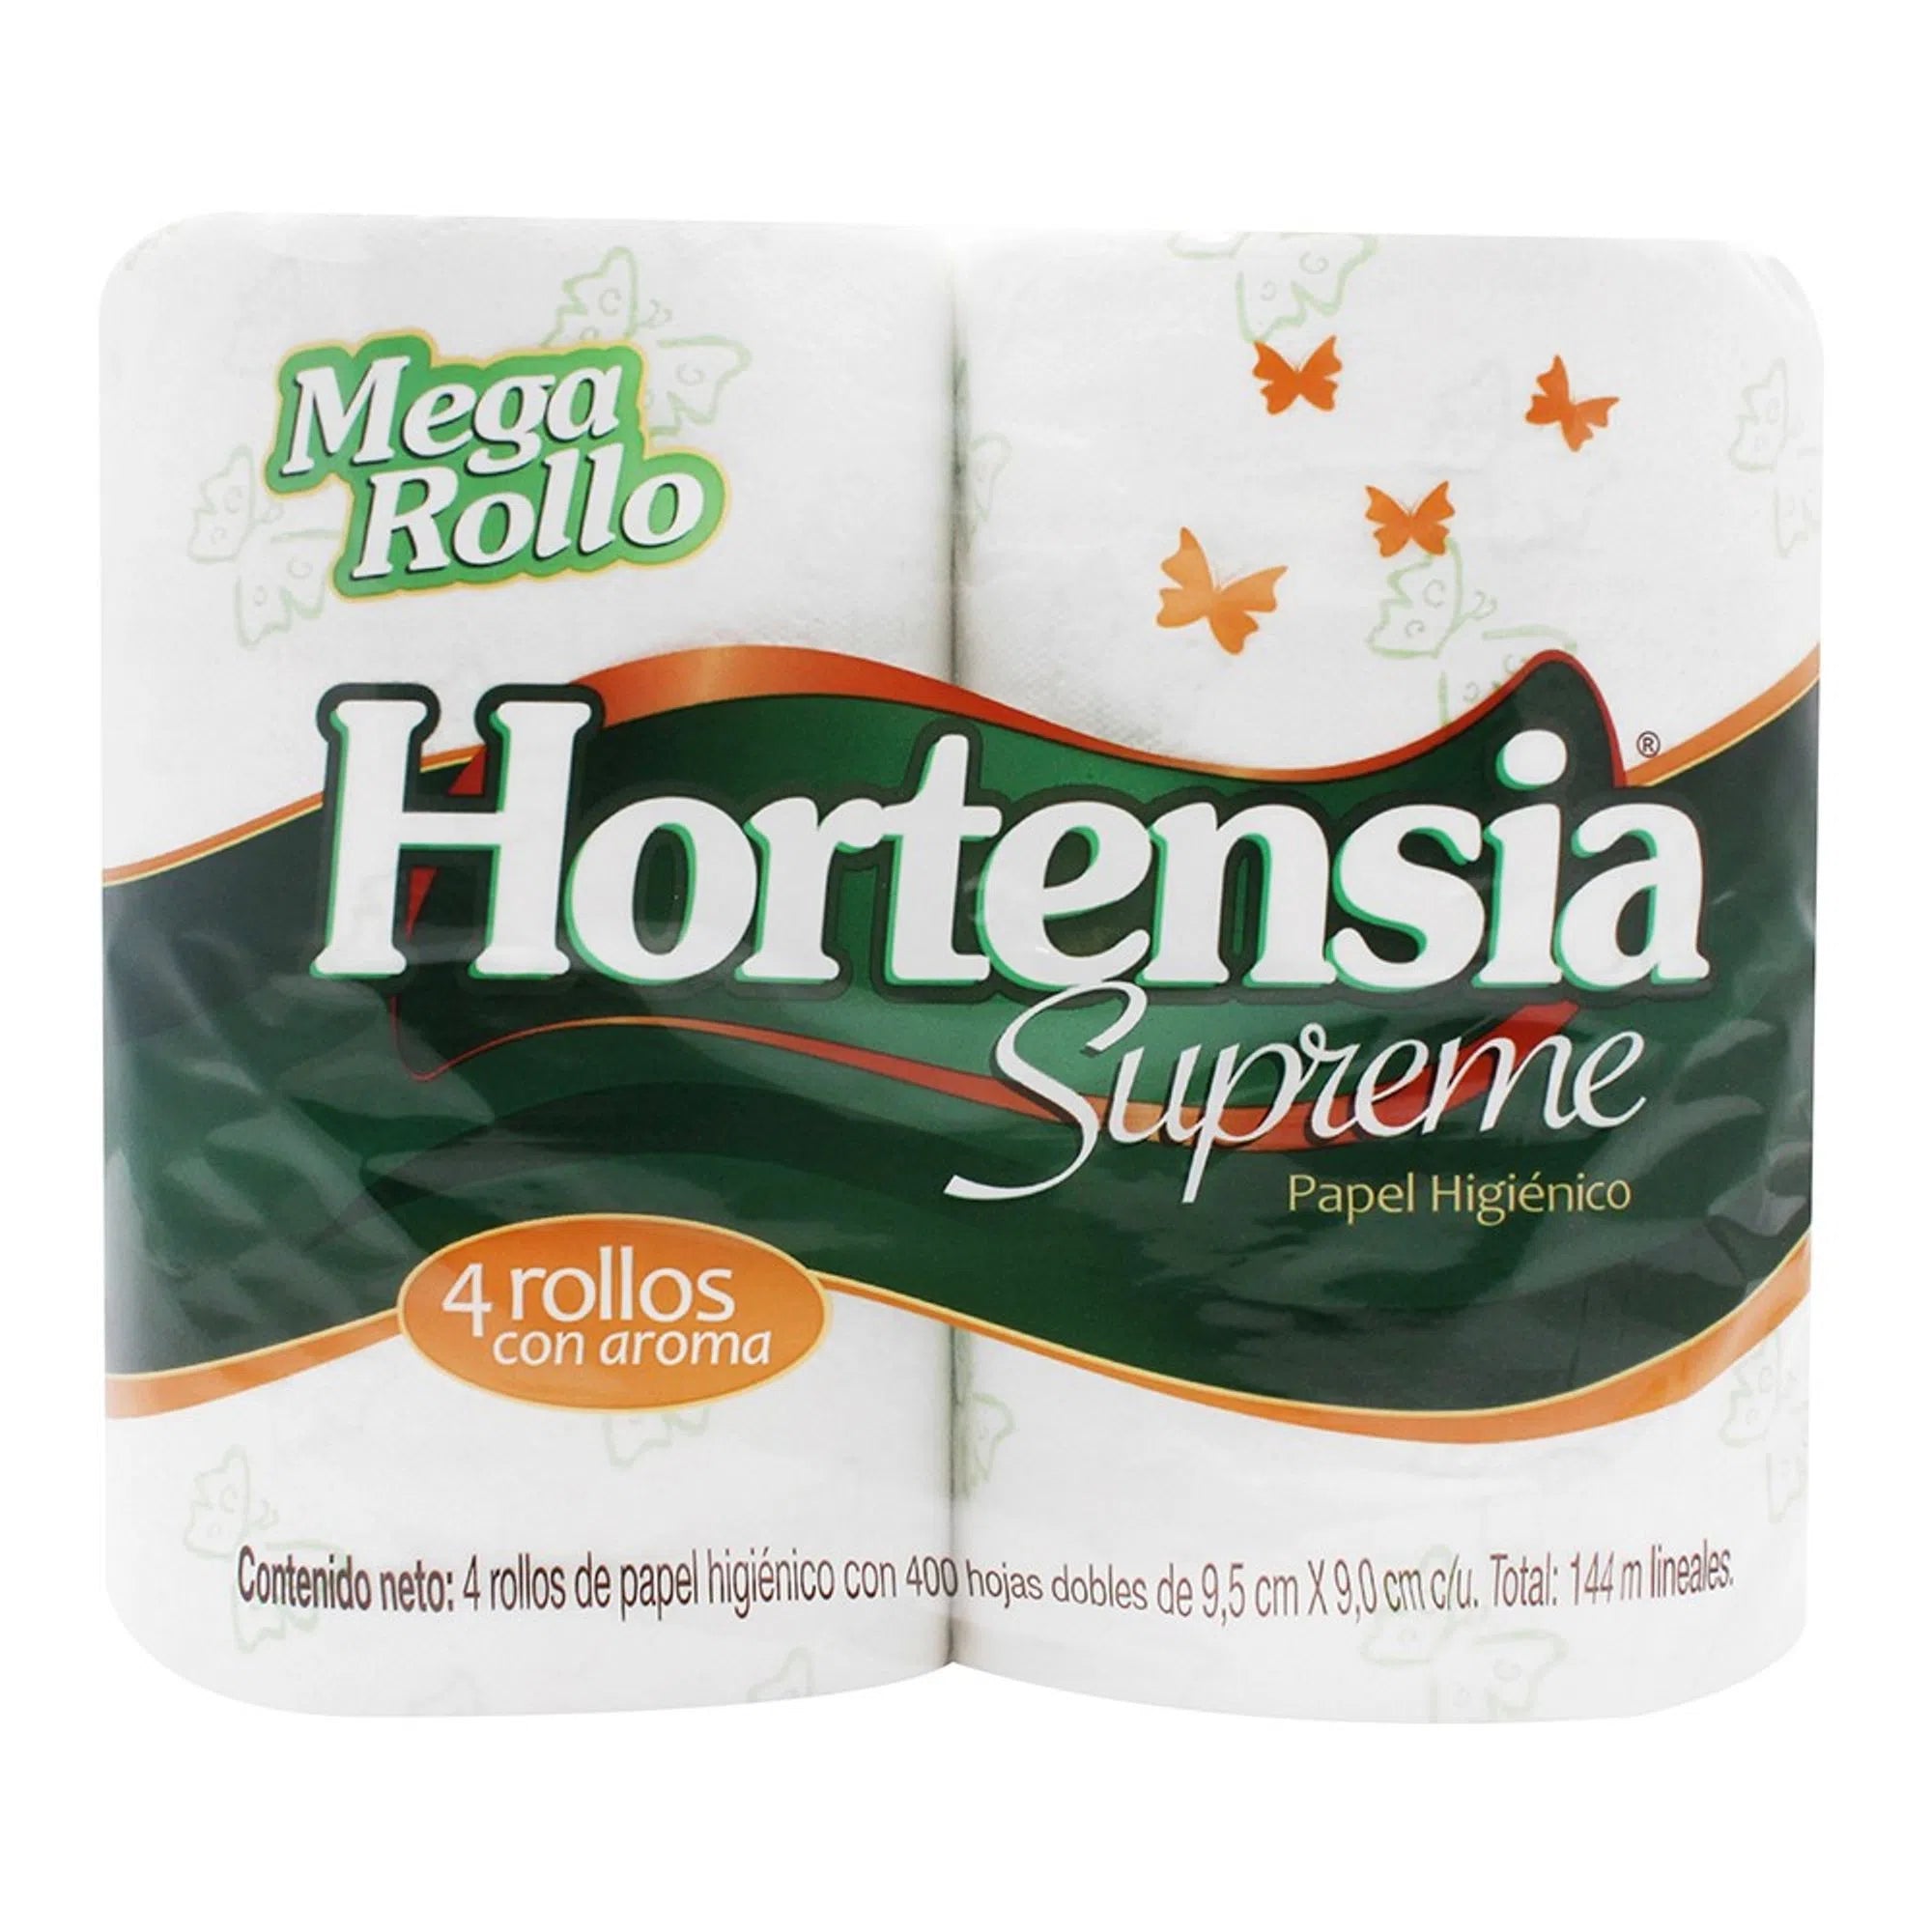 Papel Higiénico Hortensia Supreme Mega, 4 Rollos, 400hd